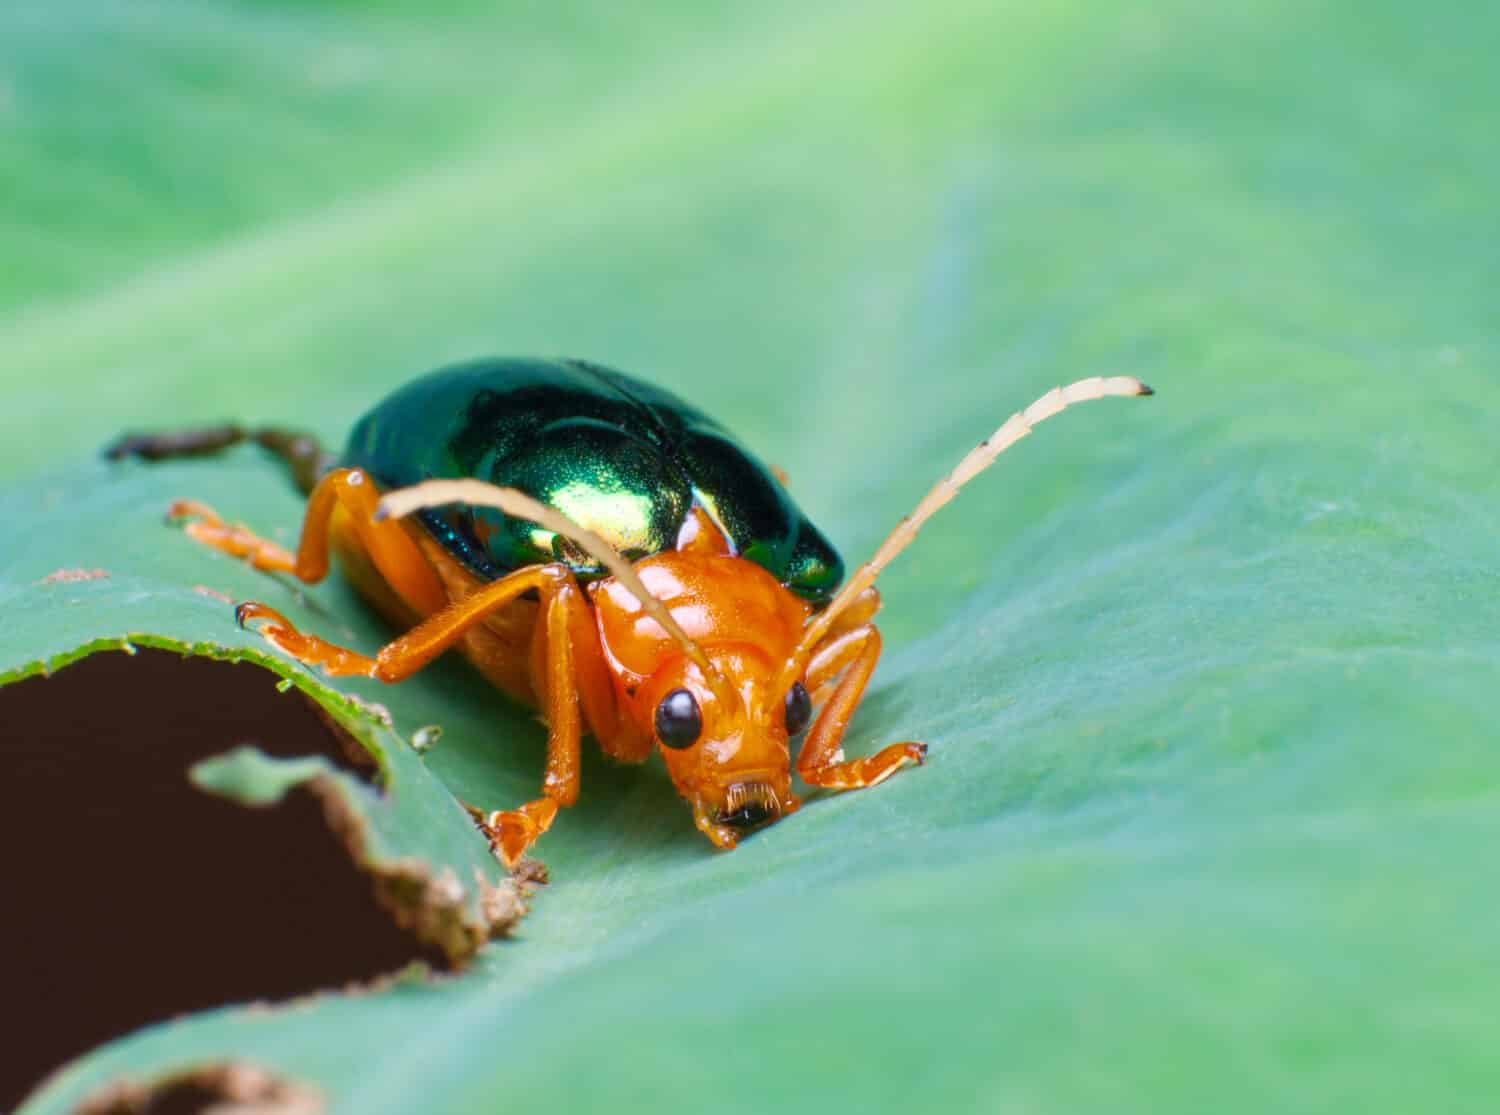 Bobbardier beetle (Brachinus alternans)